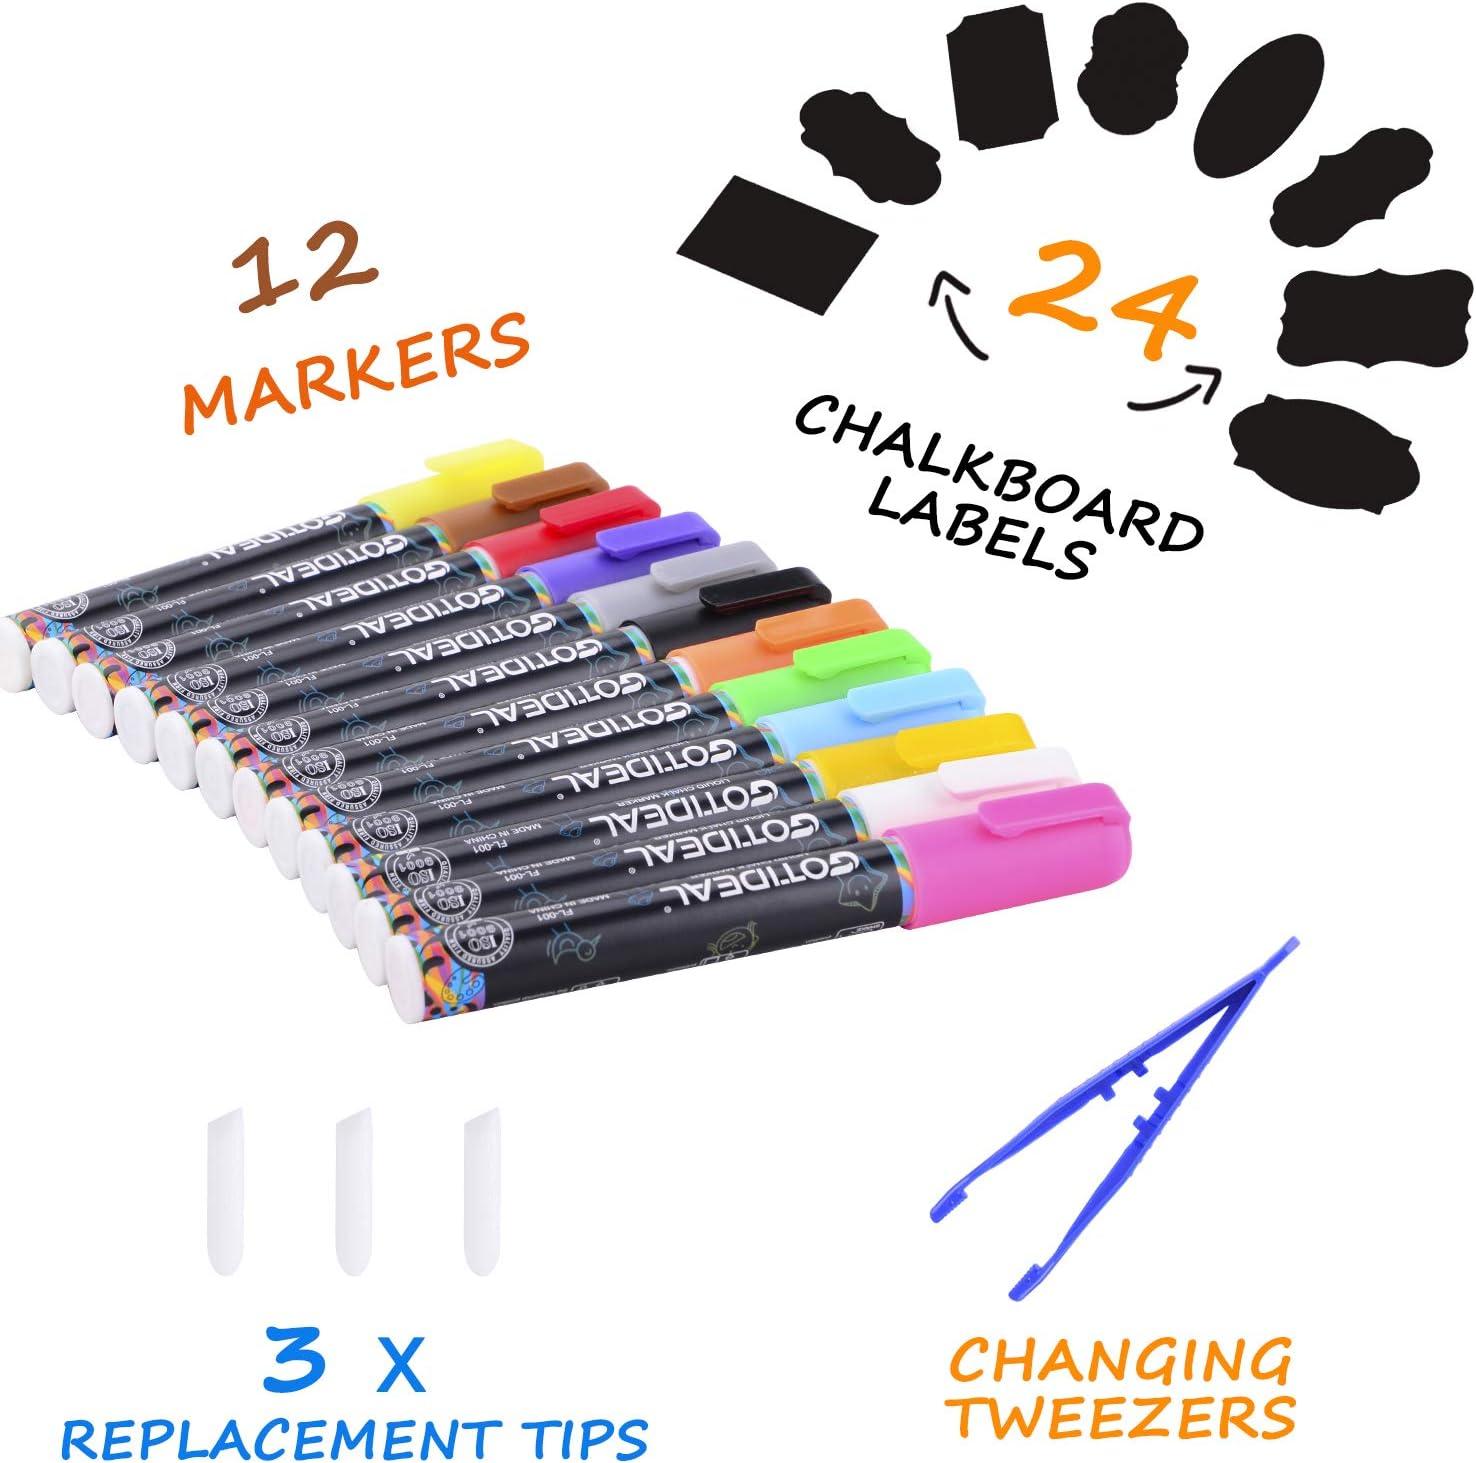 Chalk Markers 8 Colors with Bonus 24 Chalk Stickers - Premium Erasable Liquid CH